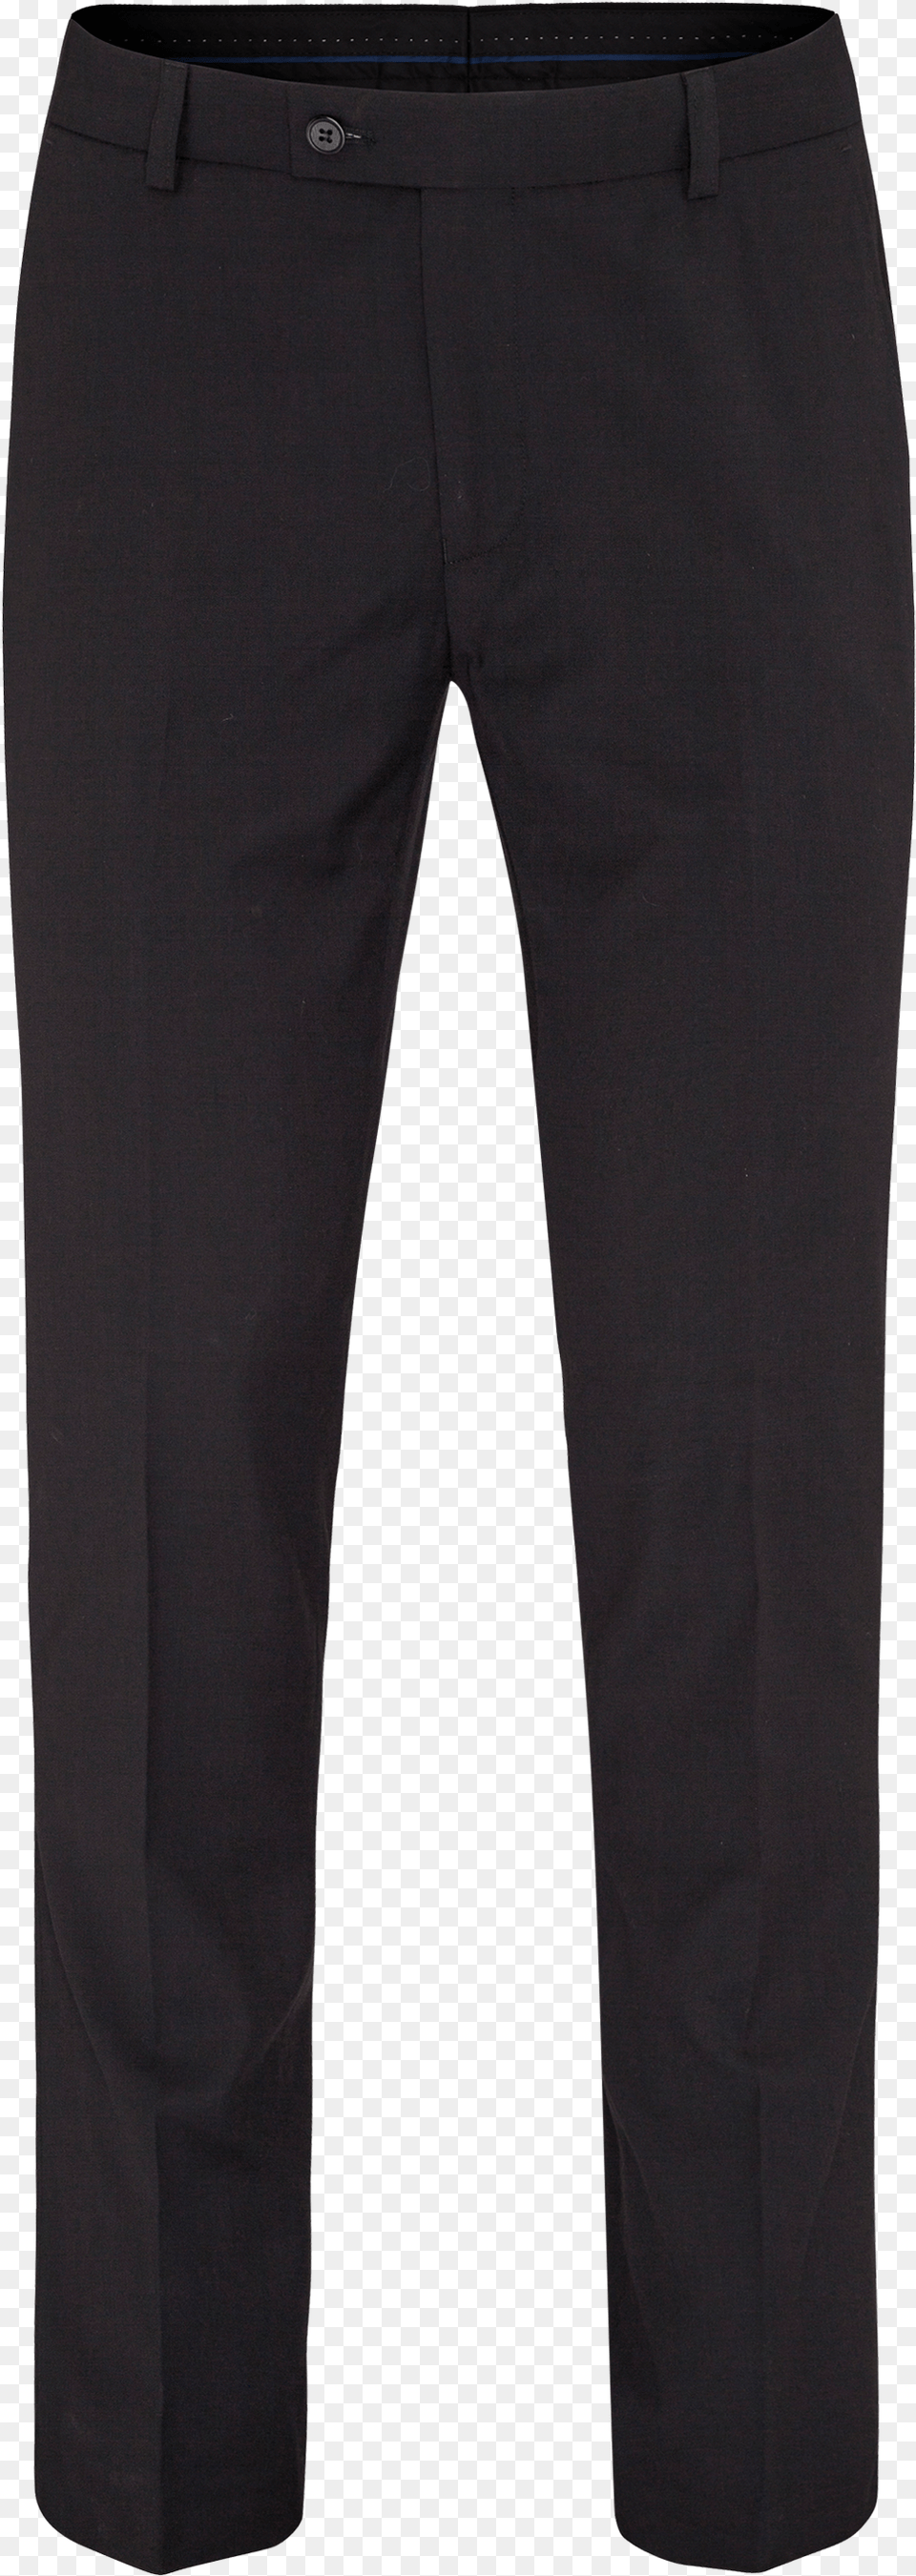 Huf Fulton Chino Pant Black, Clothing, Jeans, Pants Png